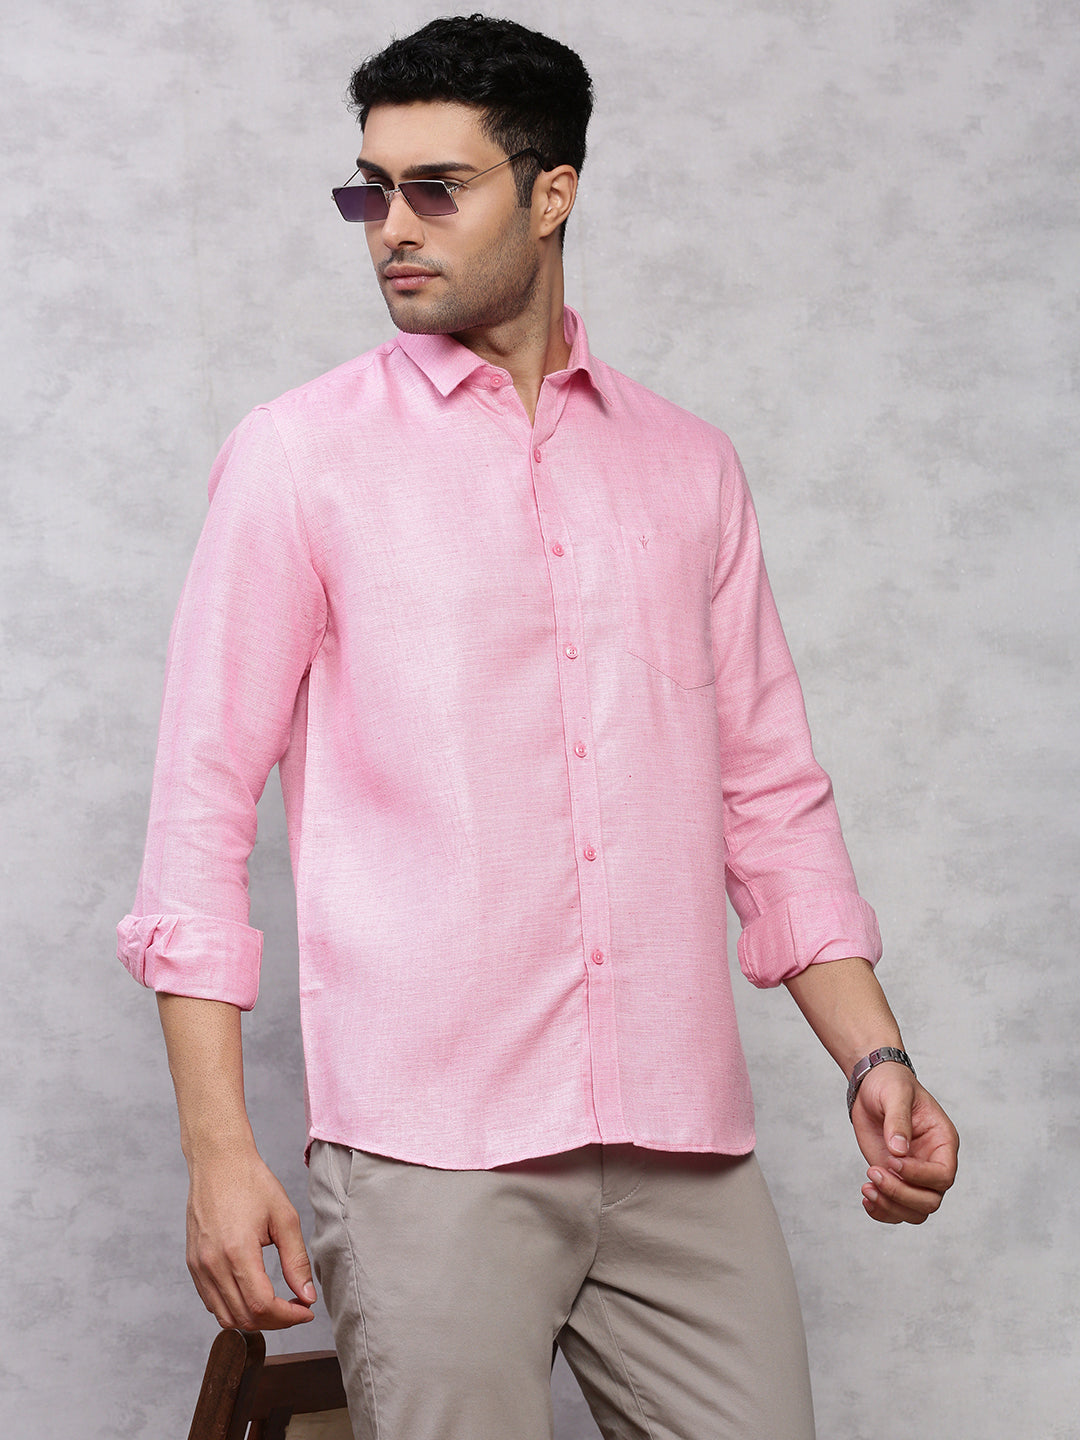 Mens Formal Shirt Pink T7 CG10